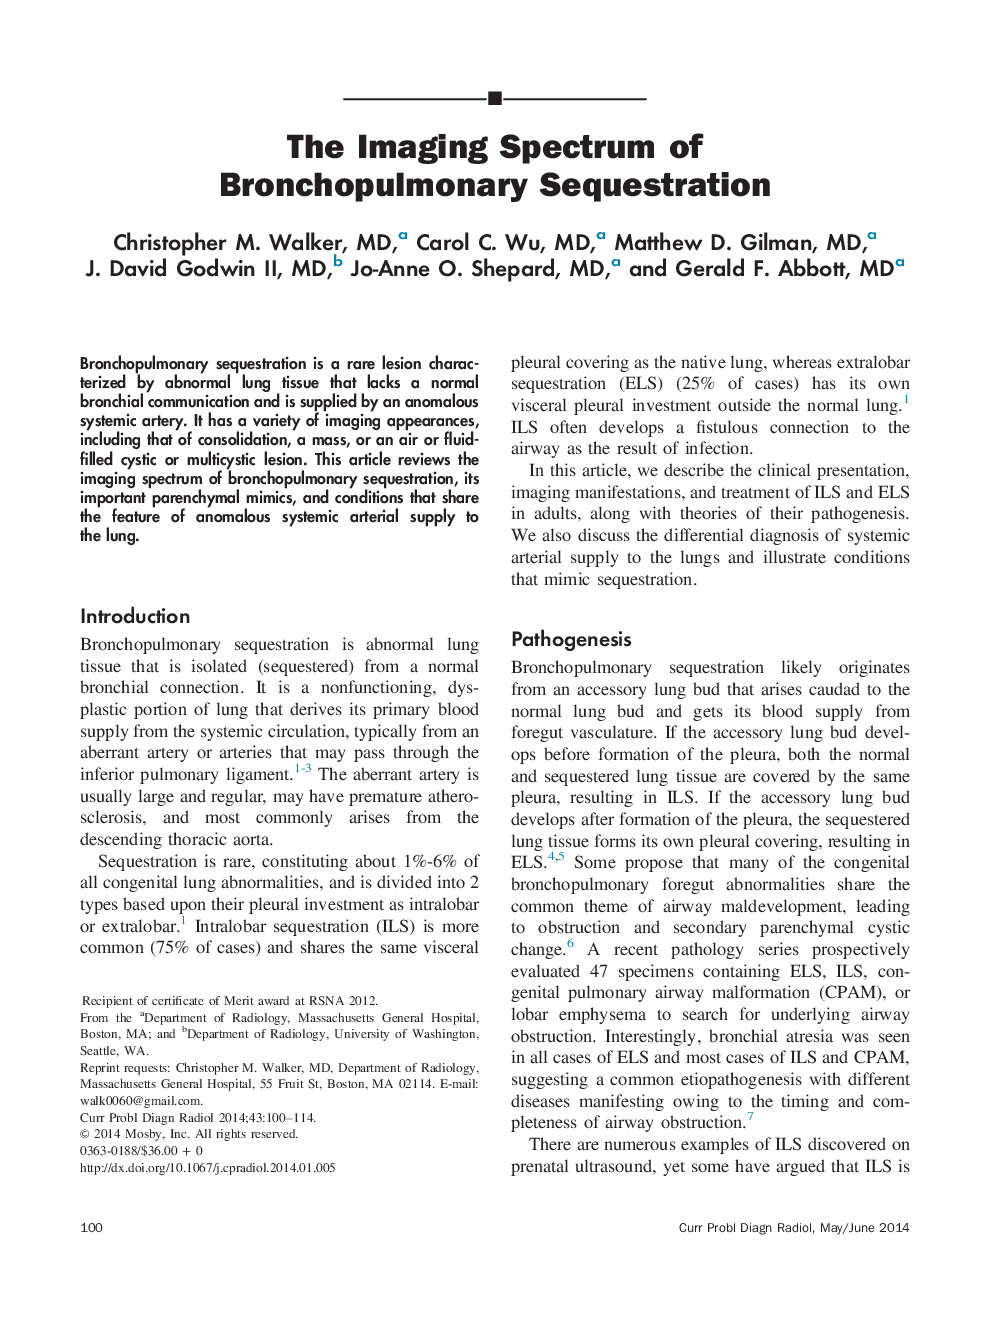 The Imaging Spectrum of Bronchopulmonary Sequestration 